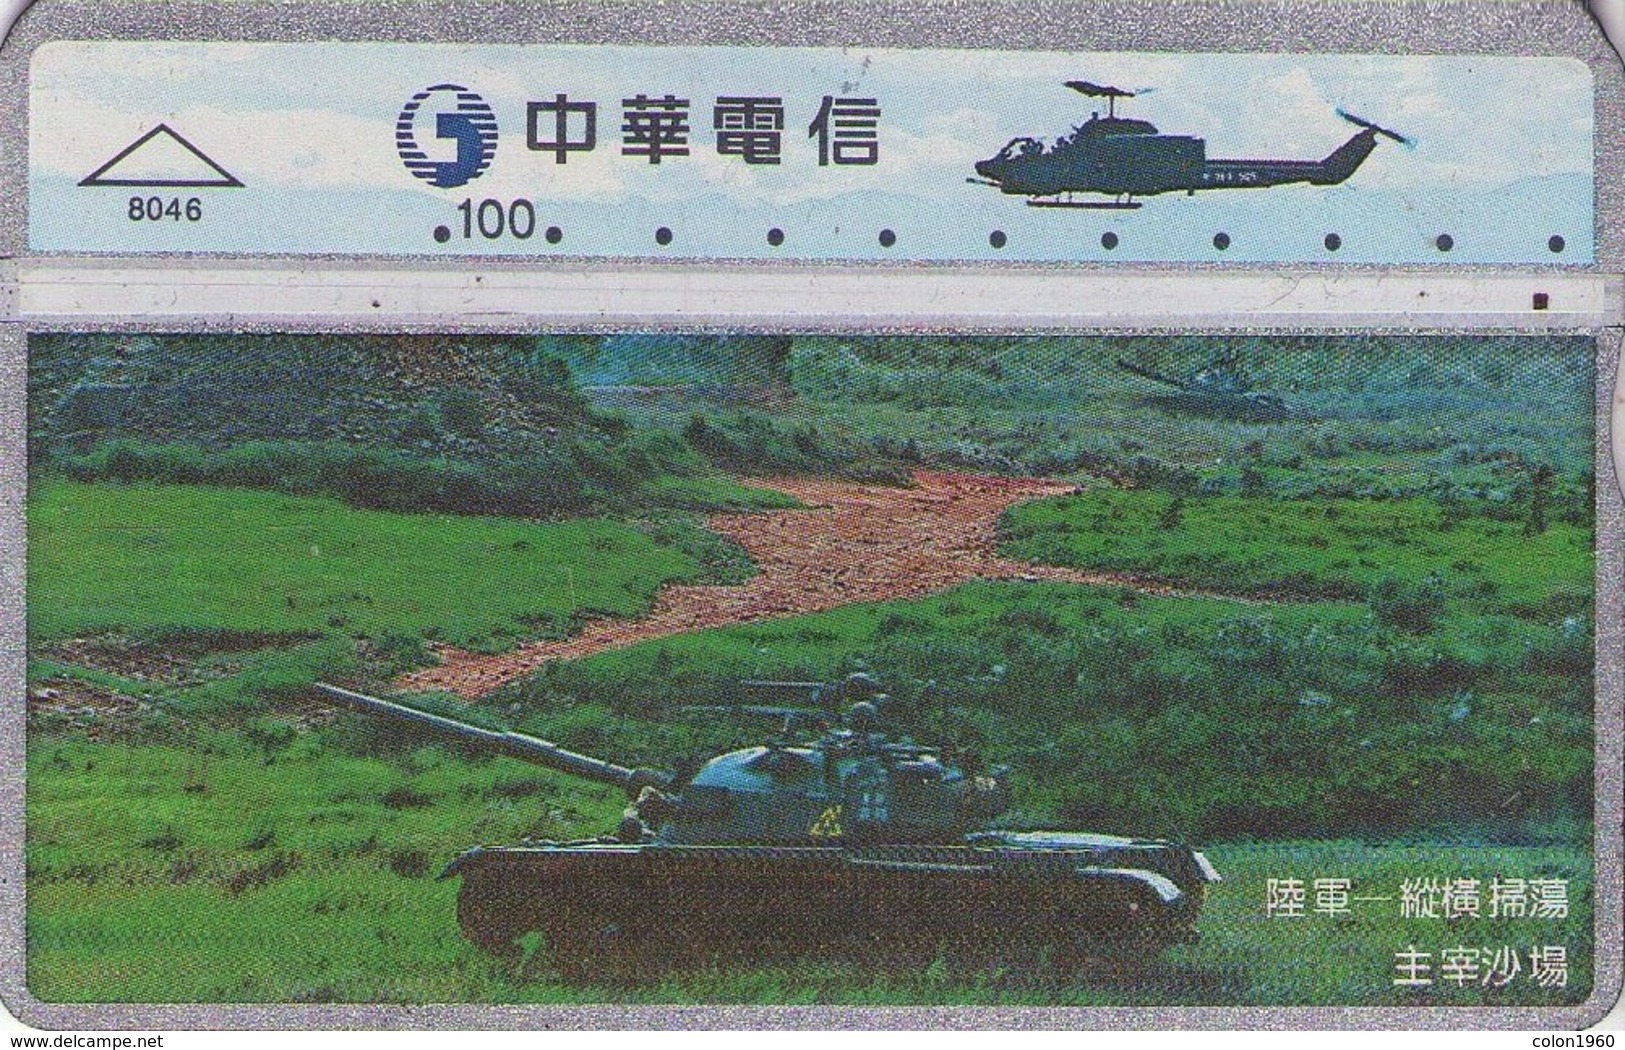 TAIWAN. 840K. ARMY - TANK. 8046. (119) - Armée